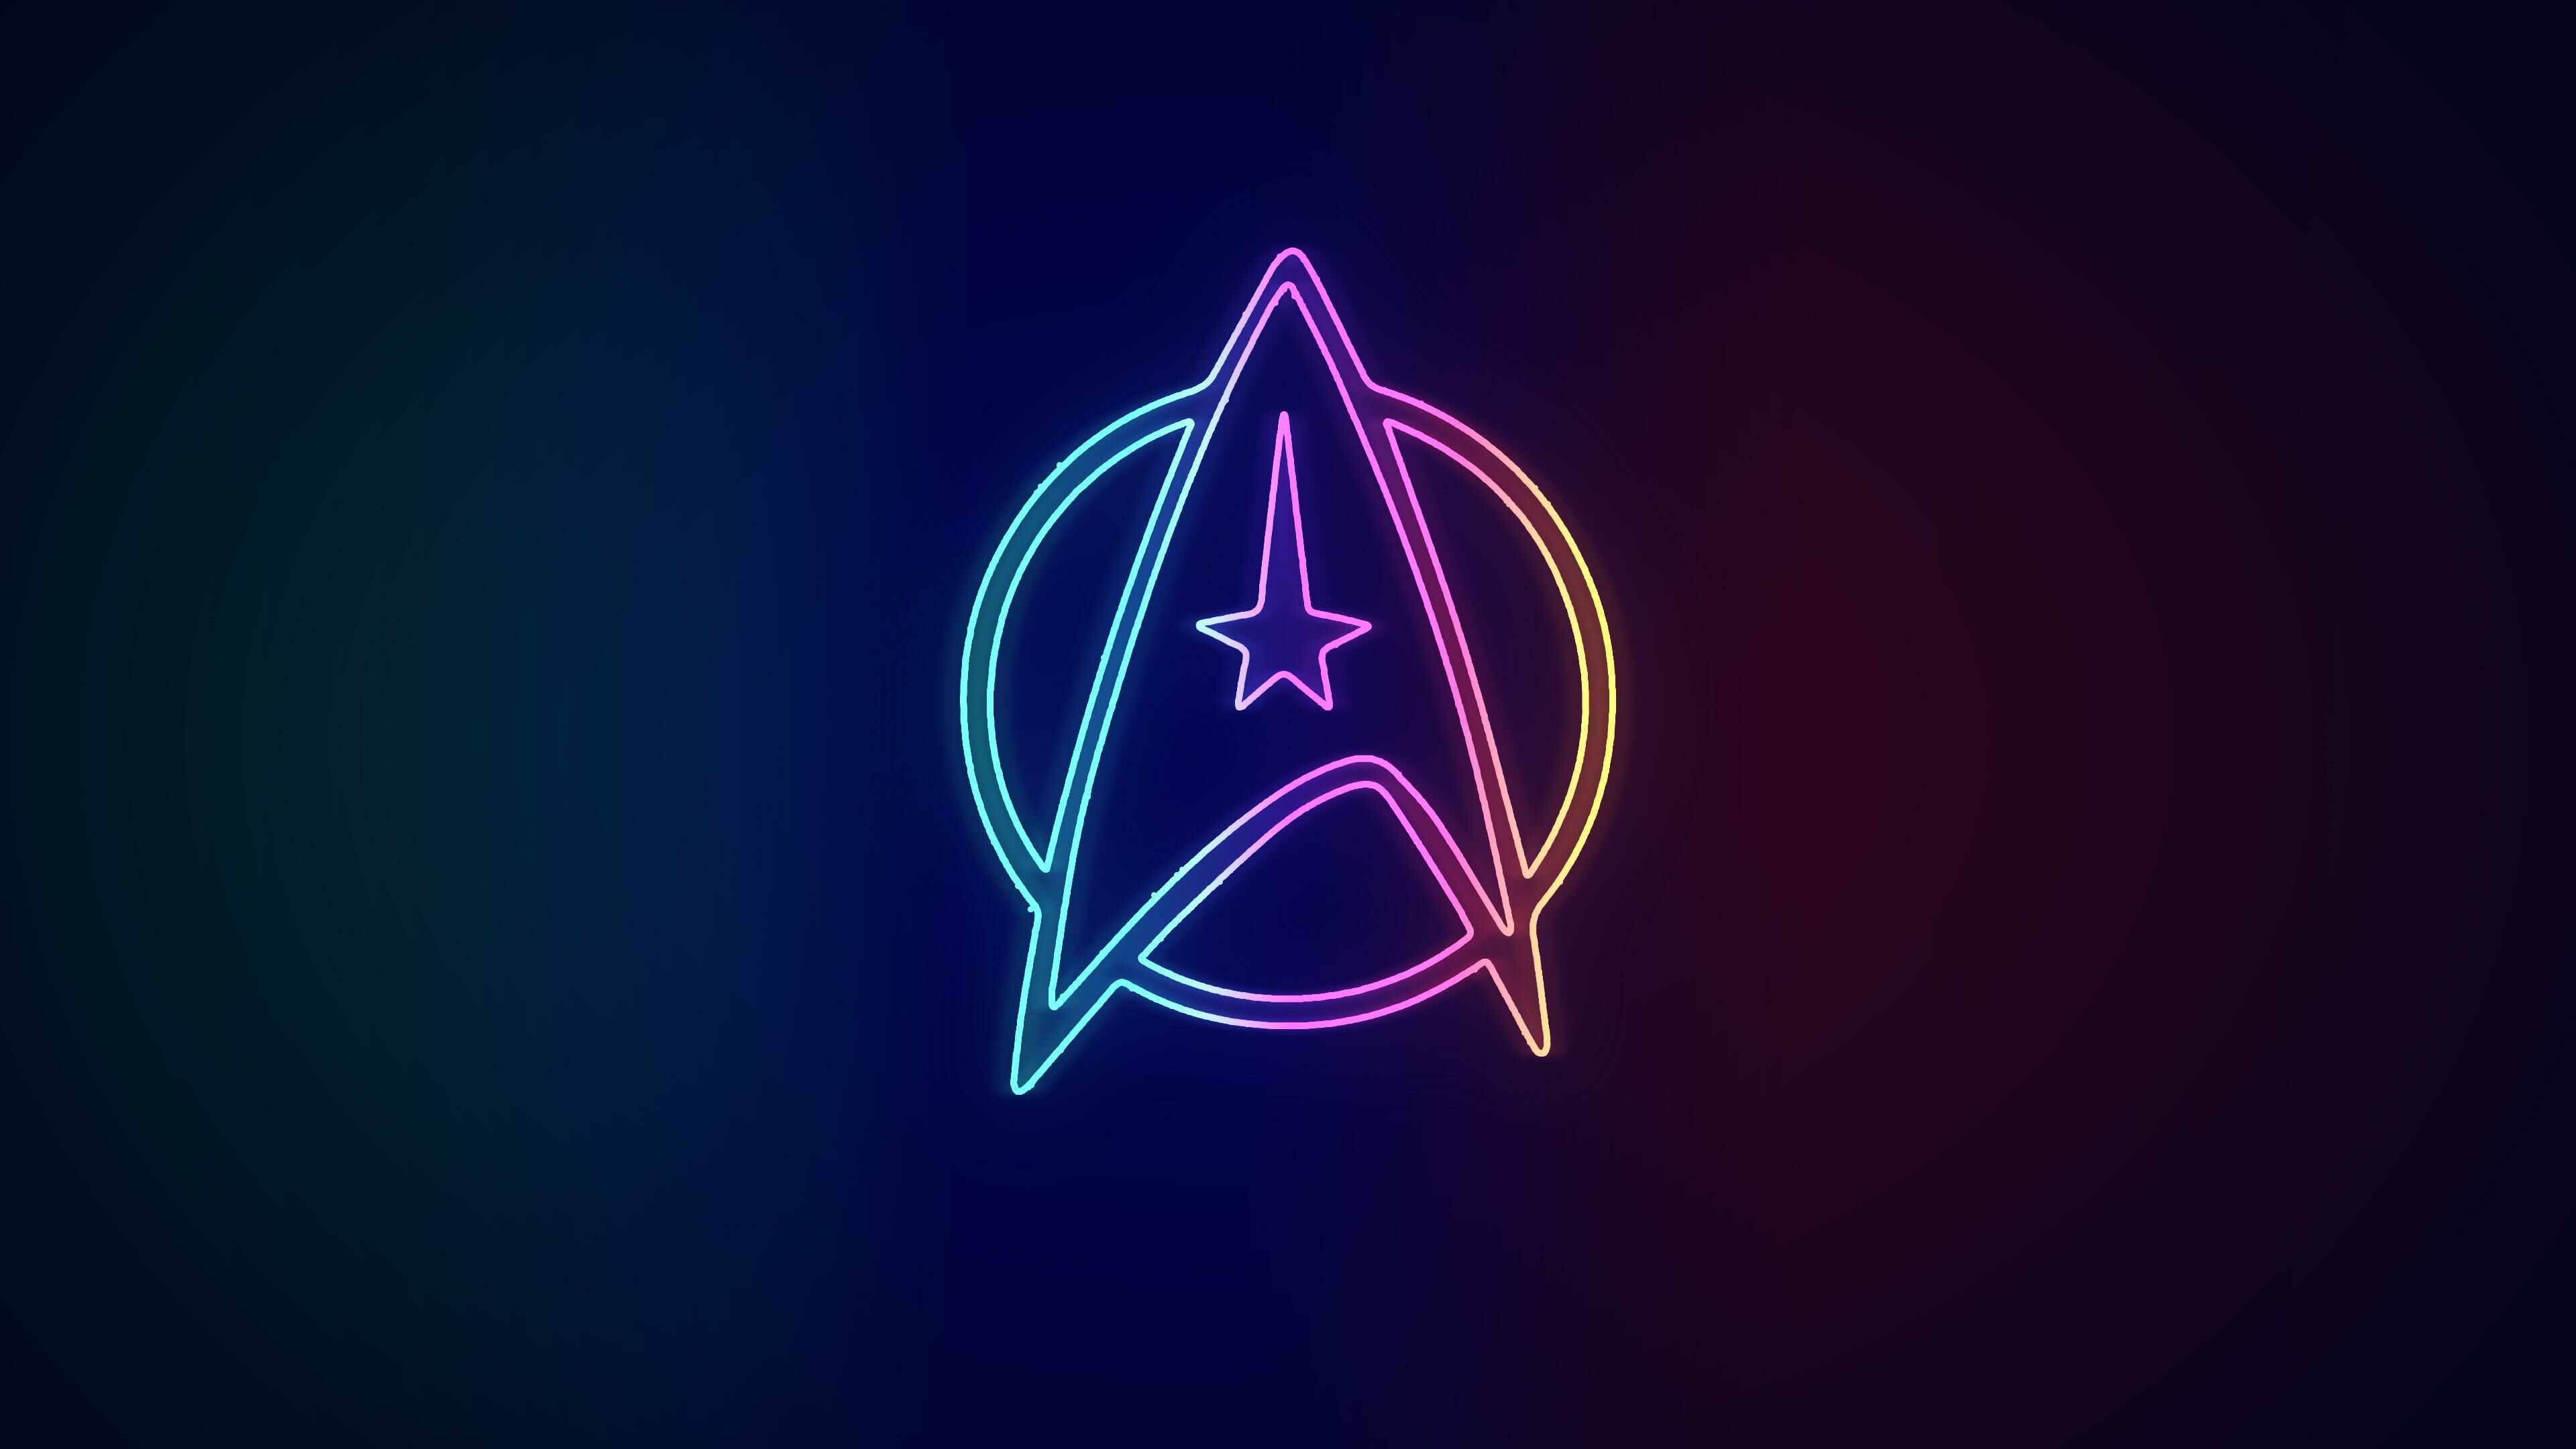 Star Trek: Logo, Neon Sign, Artwork, TV show. 3840x2160 4K Background.